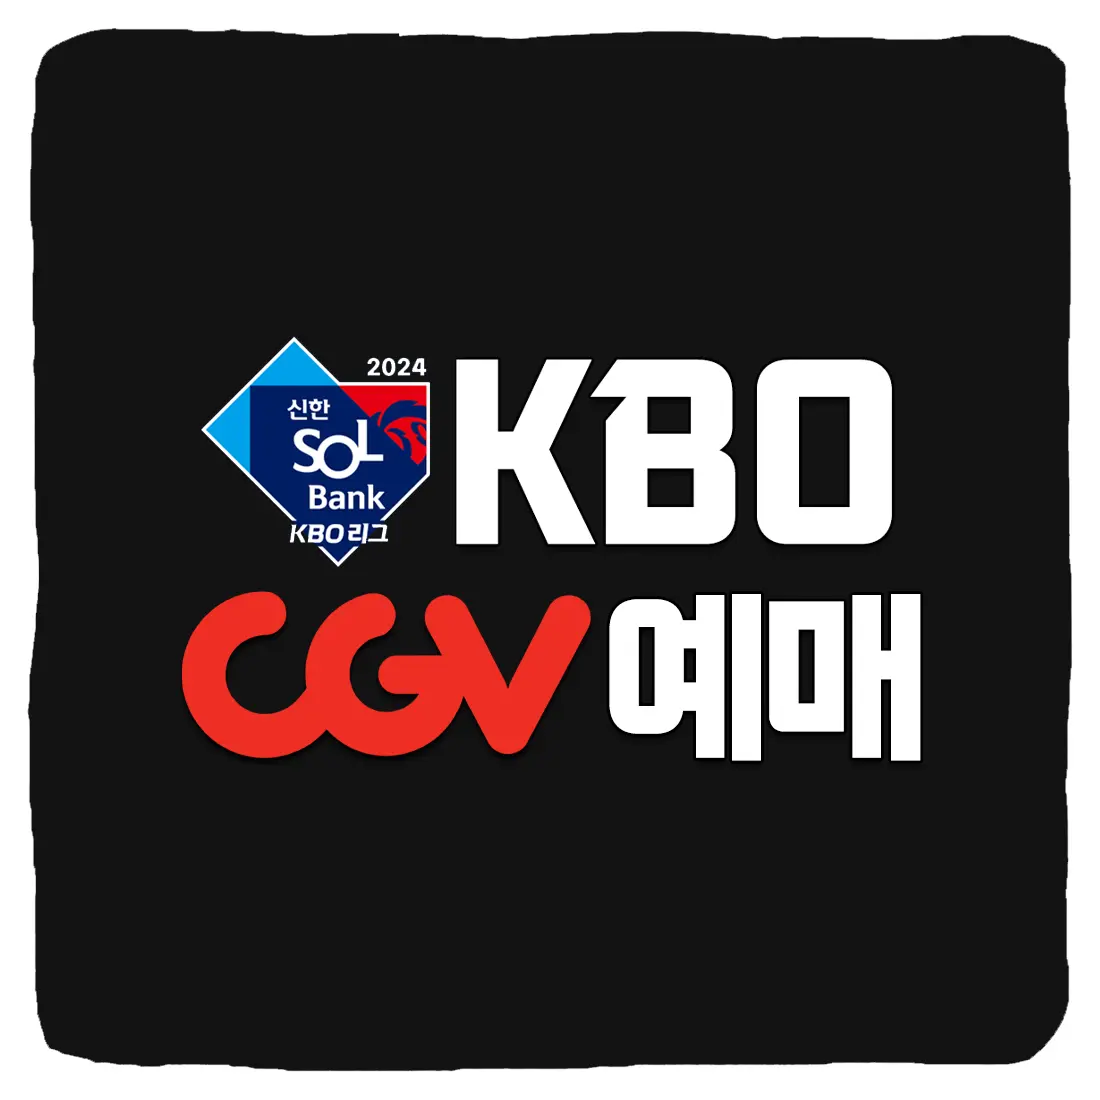 CGV KBO 생중계 예매 및 프로야구 경기 상영 극장 일정 시간표 티켓 가격